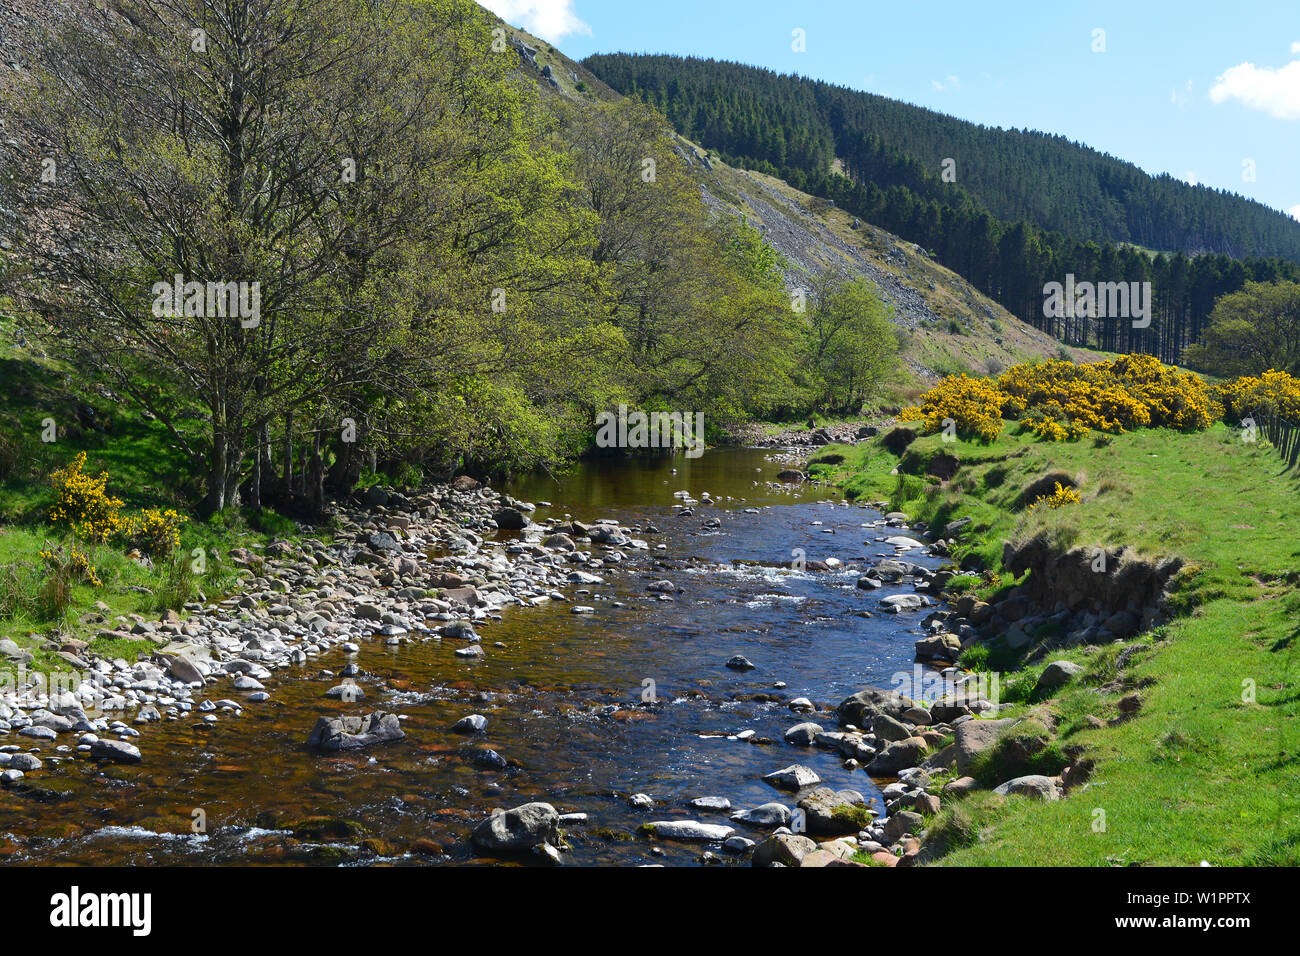 River Breamish, Ingram Valley, Northumberland Stock Photo